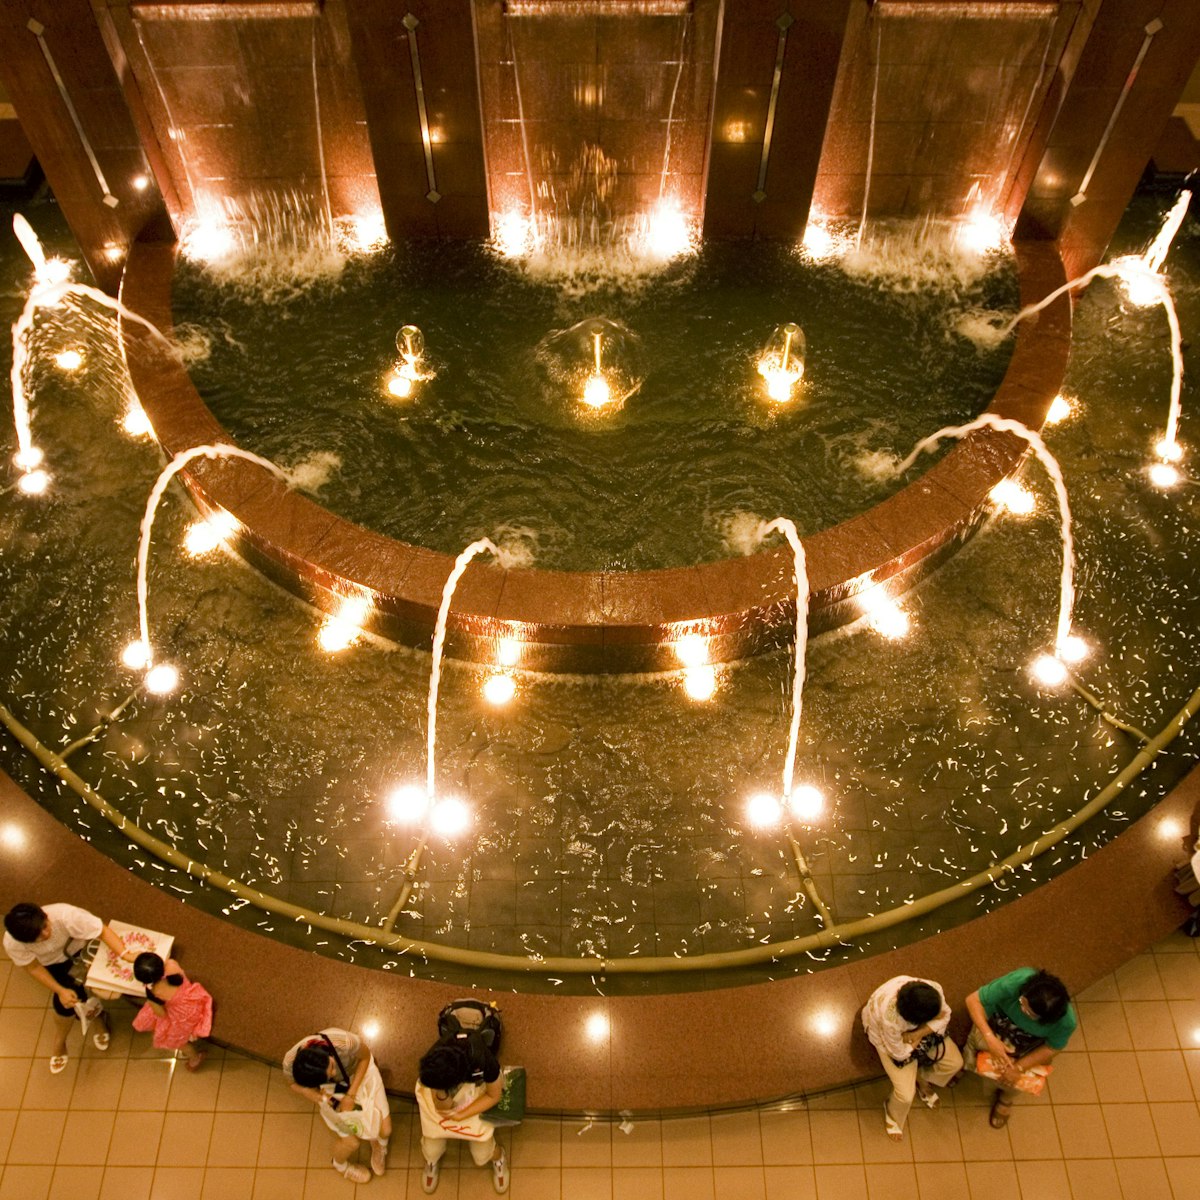 Ngee Ann City Shopping Centre Fountain.